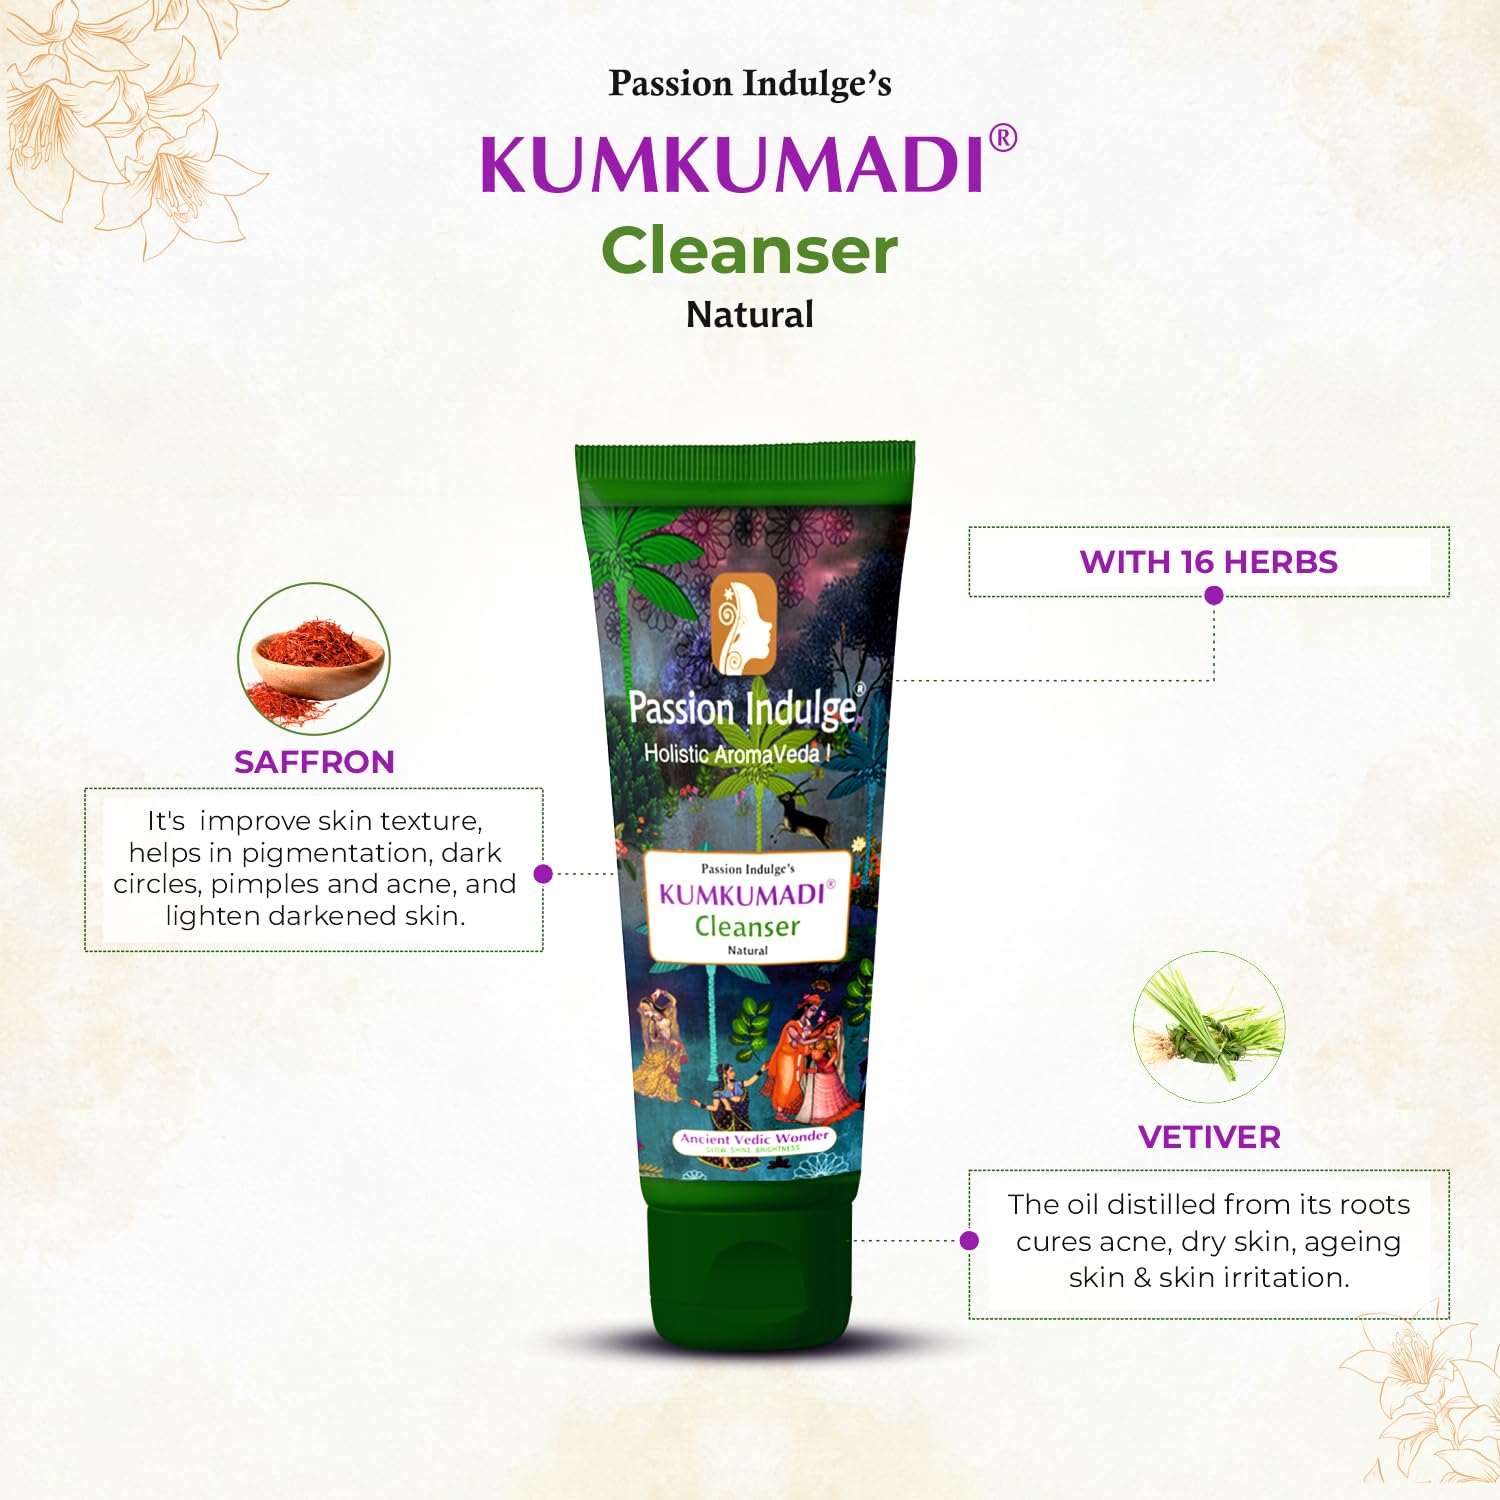 Kumkumadi Kit-Kumkumadi Natural Handmade Bath Bar, Kumkumadi face Cleanser & Kumkumadi Facial oil with Saffron, Vetiver & 16 Herbs